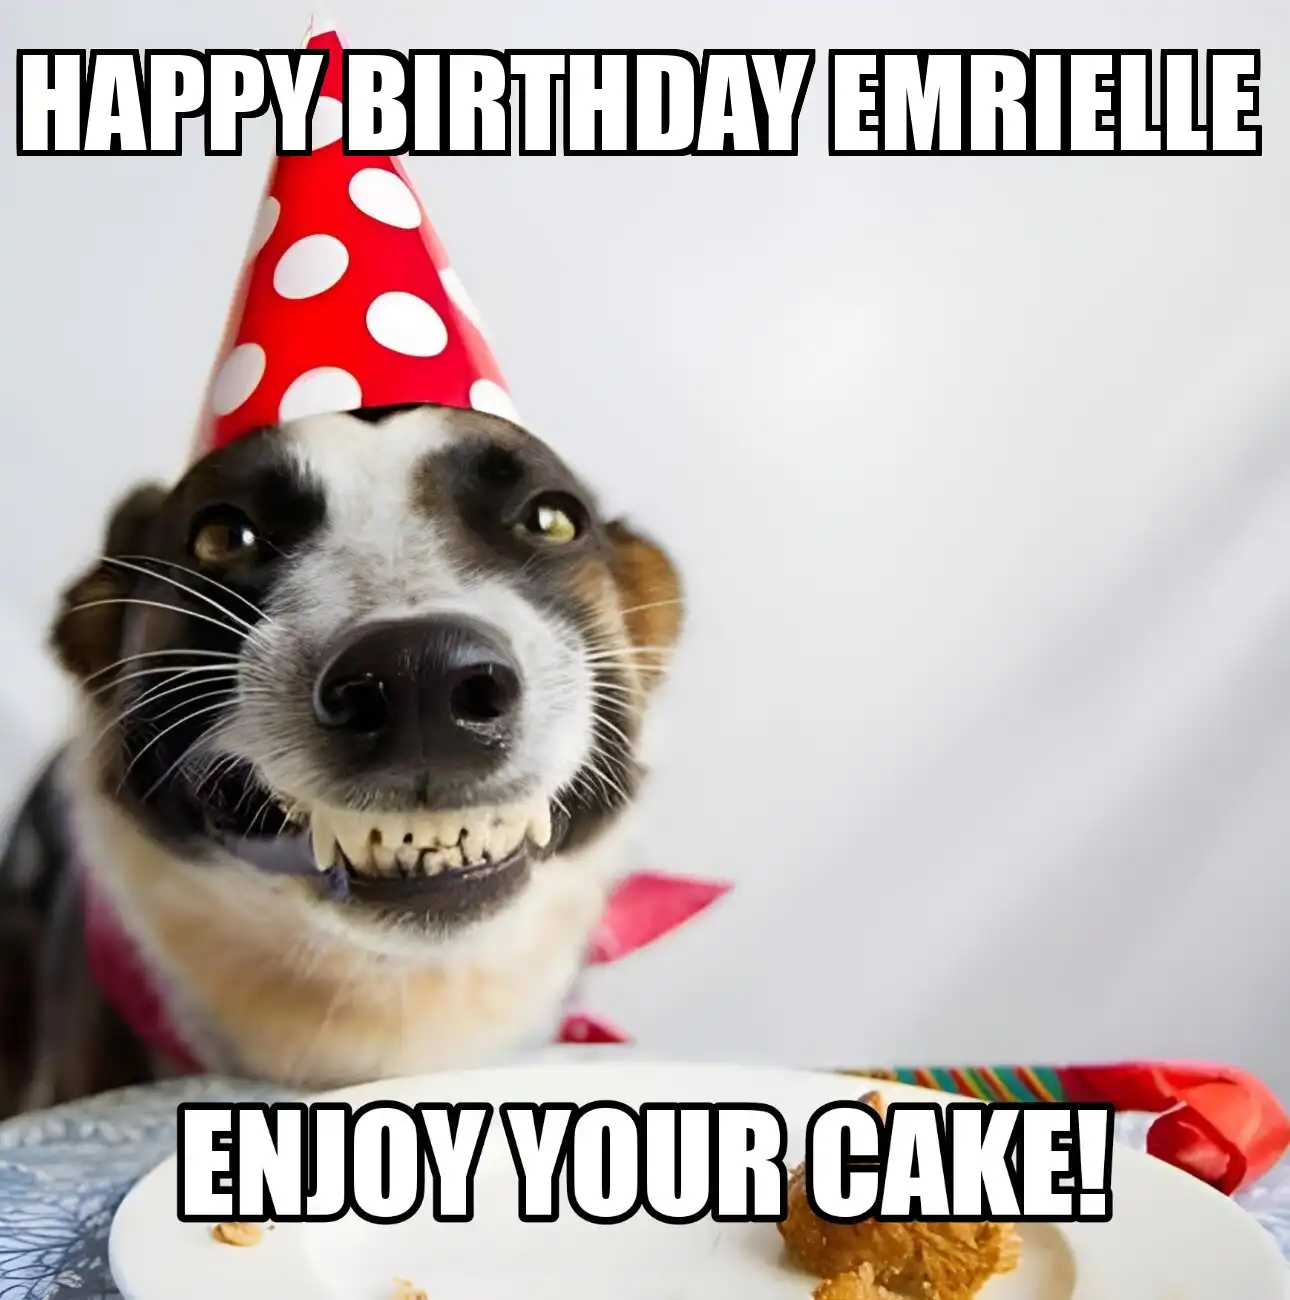 Happy Birthday Emrielle Enjoy Your Cake Dog Meme